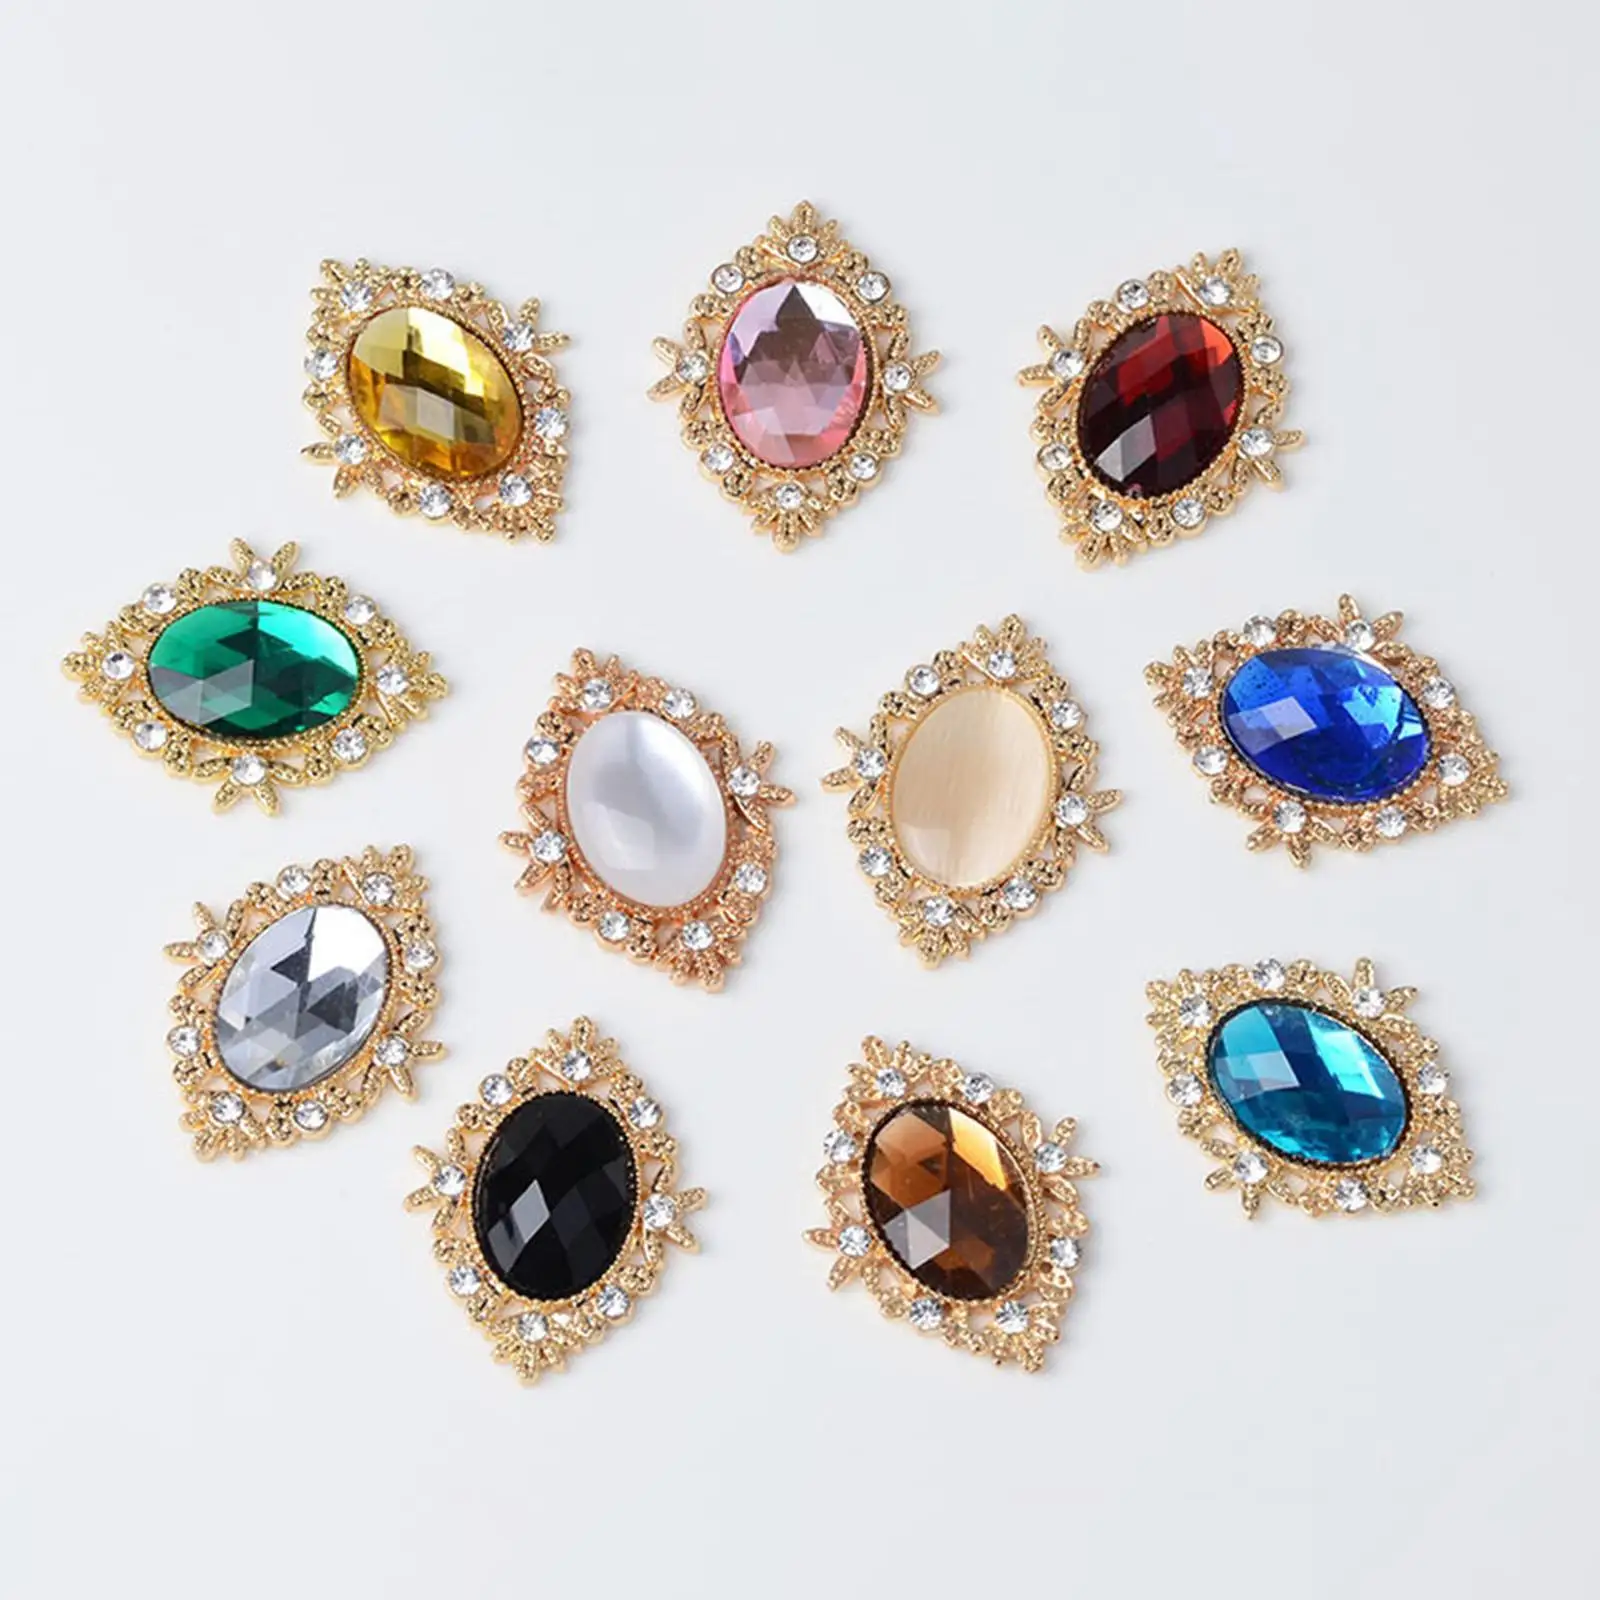 11x Rhinestones Decor Flatback Pearl Crafts Diamante Crystals Stones Acrylic Buttons for Wedding DIY Clothing Accs